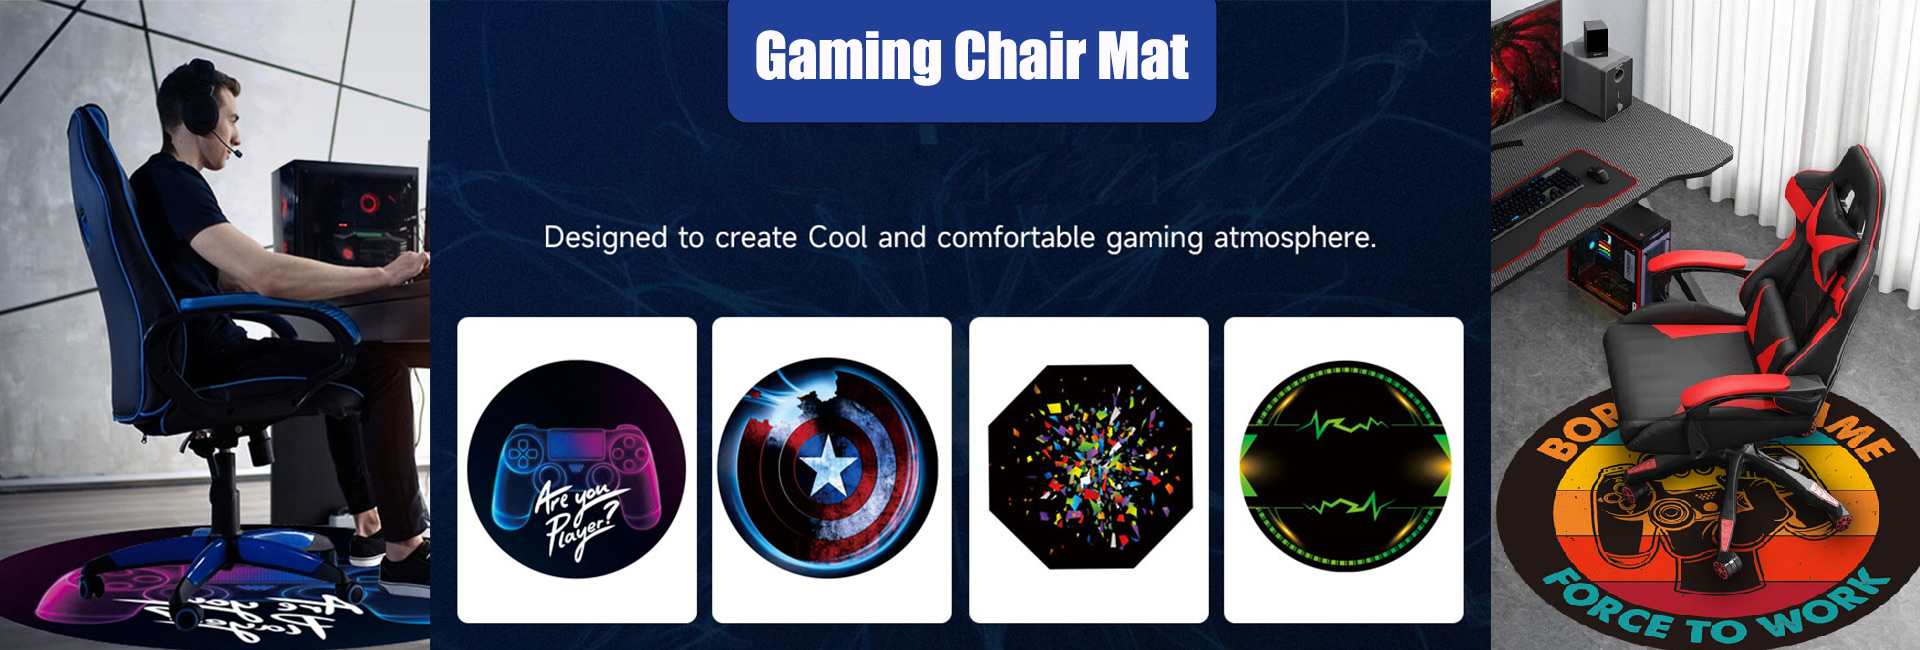 Gaming Chair Mat